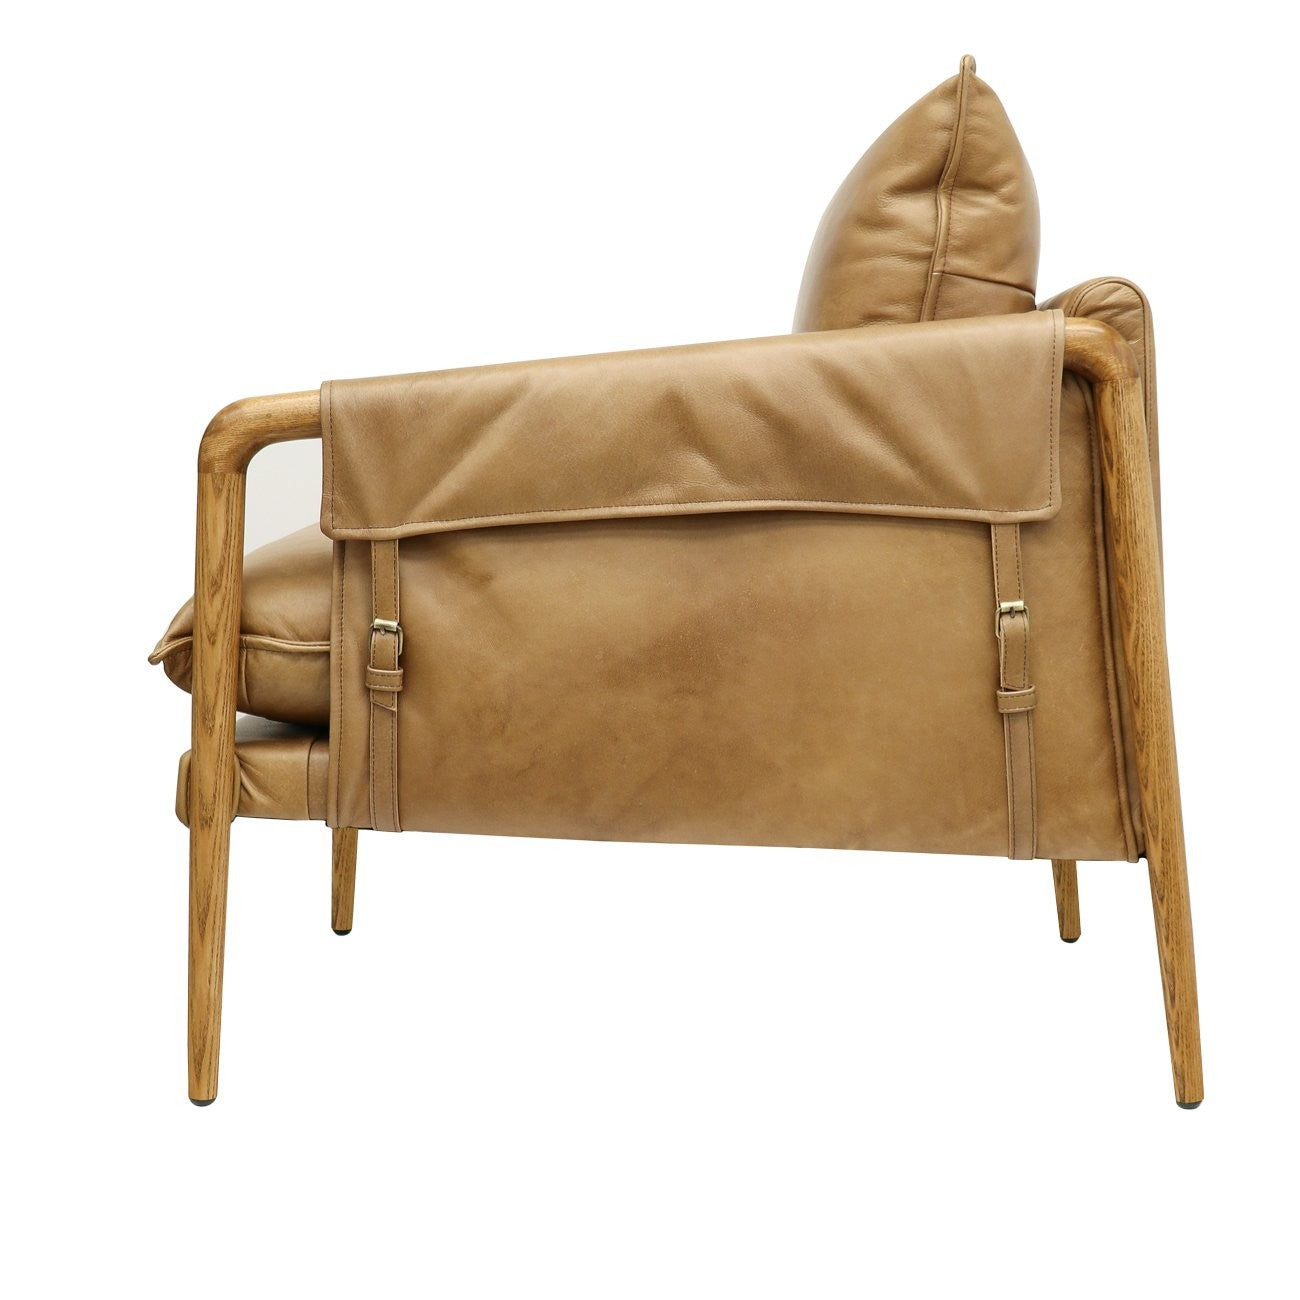 Saddle Armchair - Tan Leather